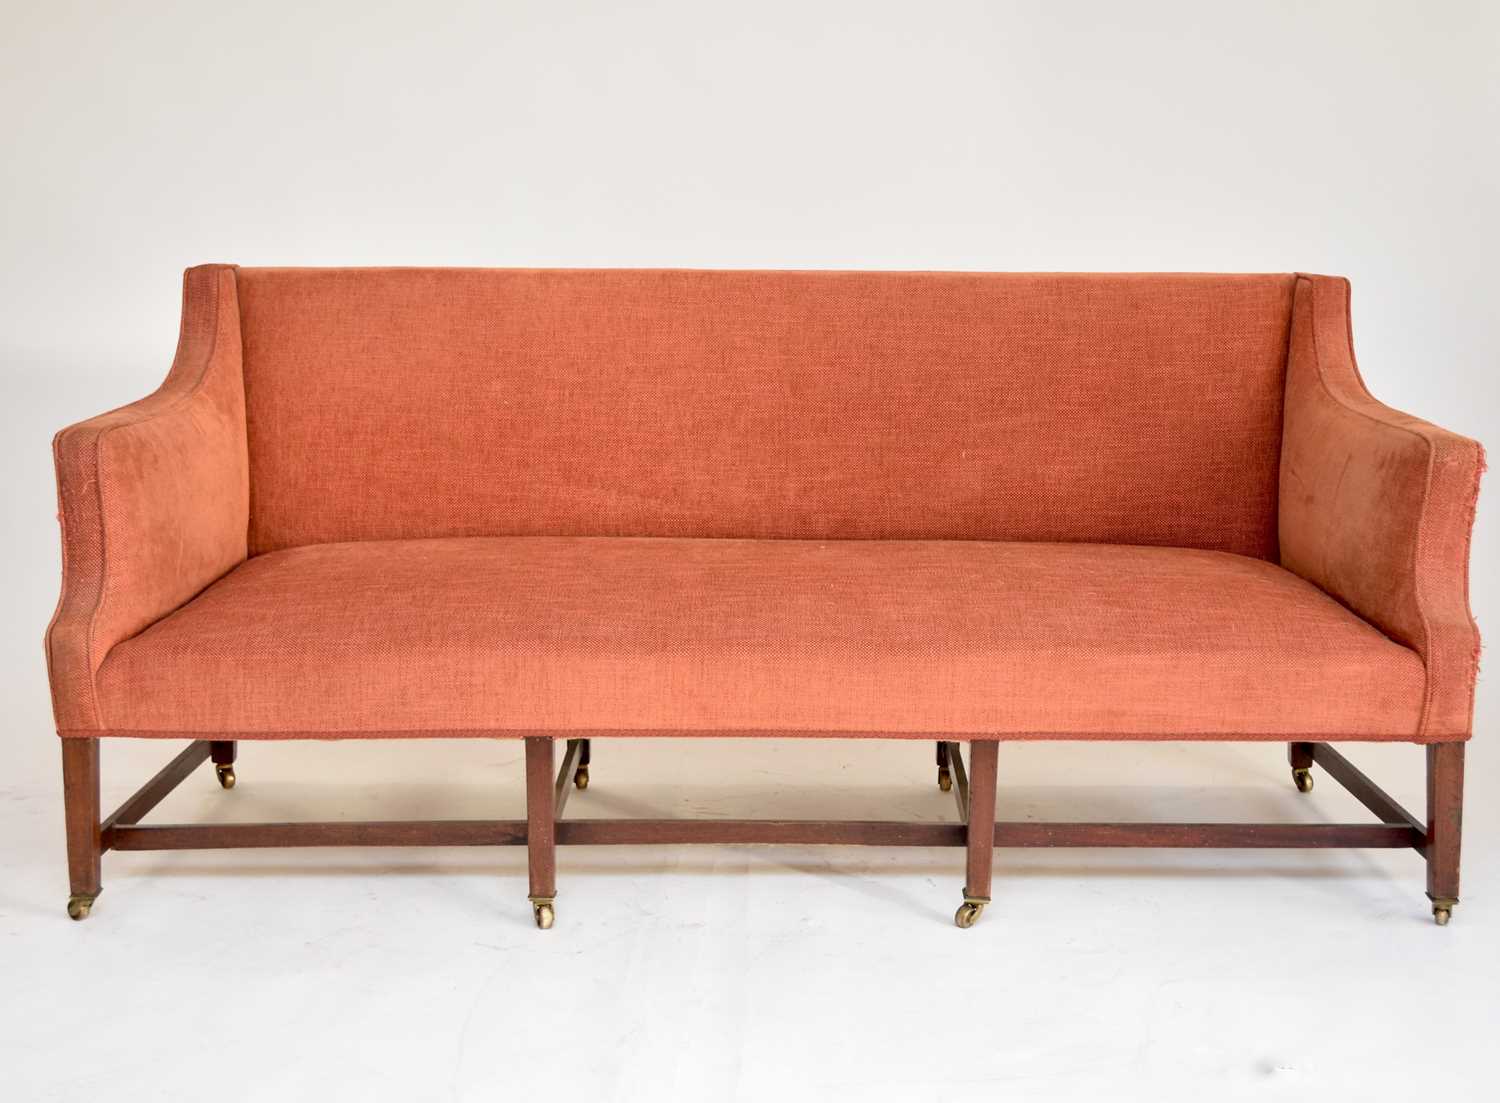 A George III upholstered mahogany settee